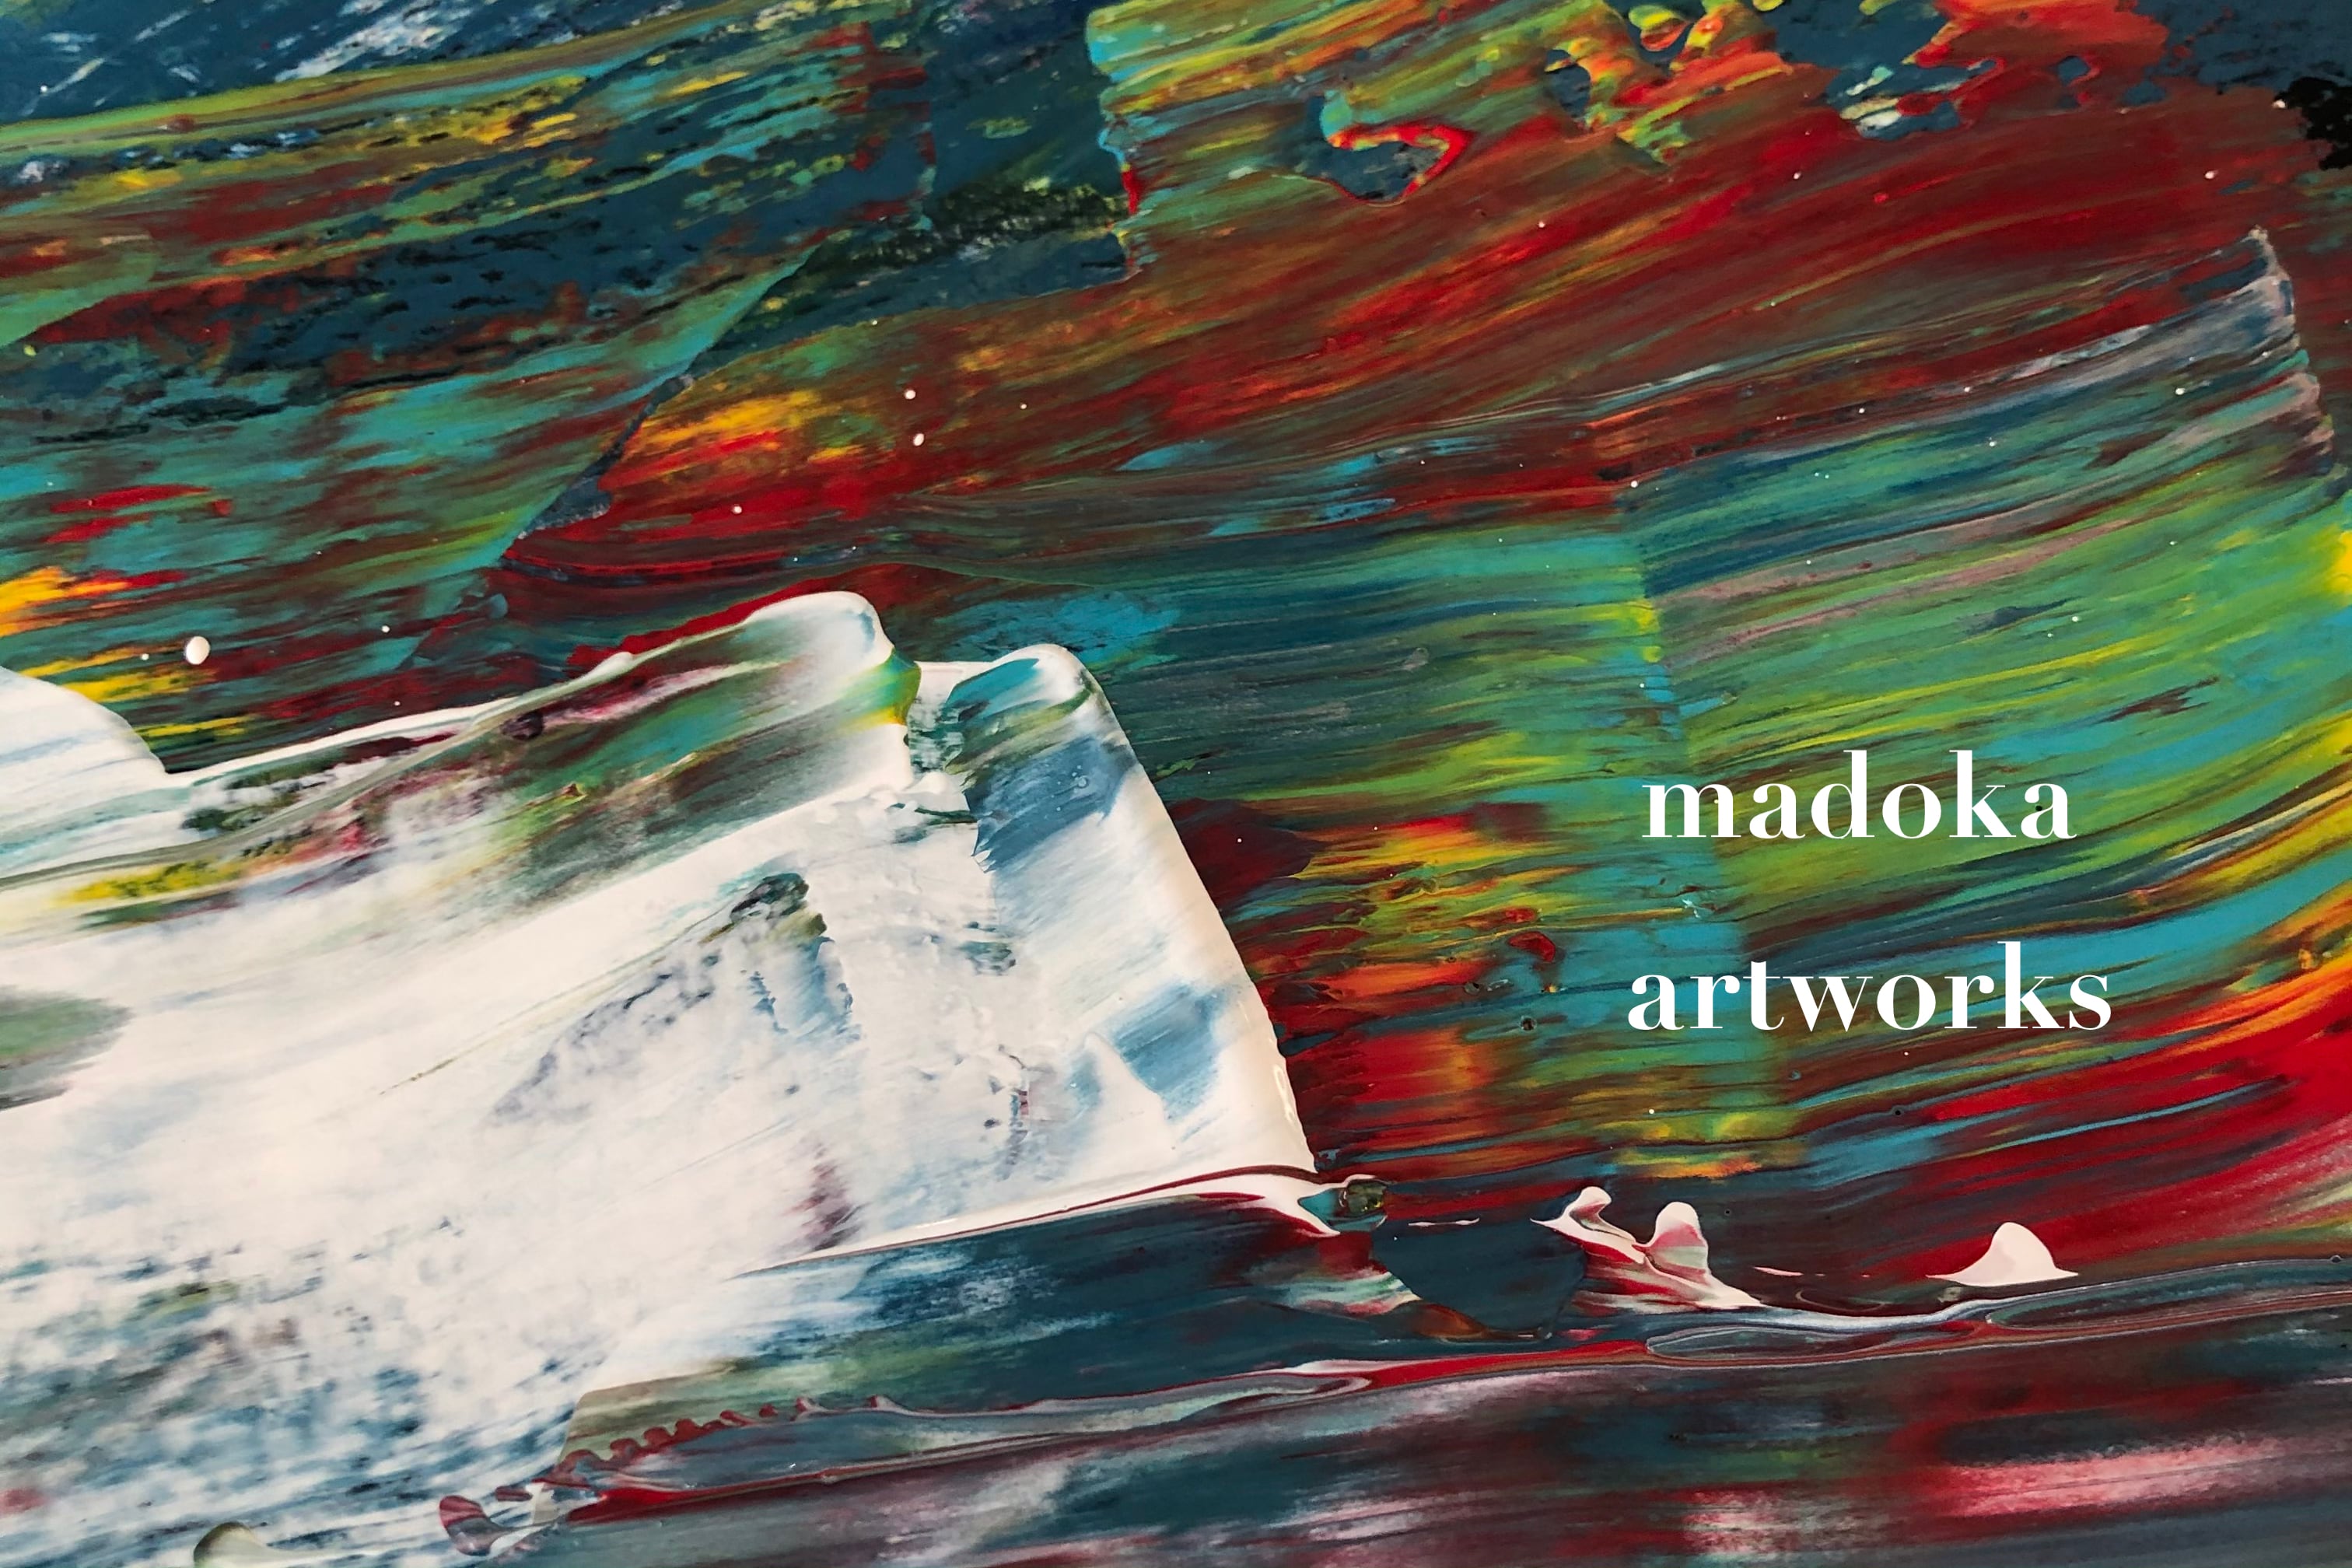 madoka artworks web shop